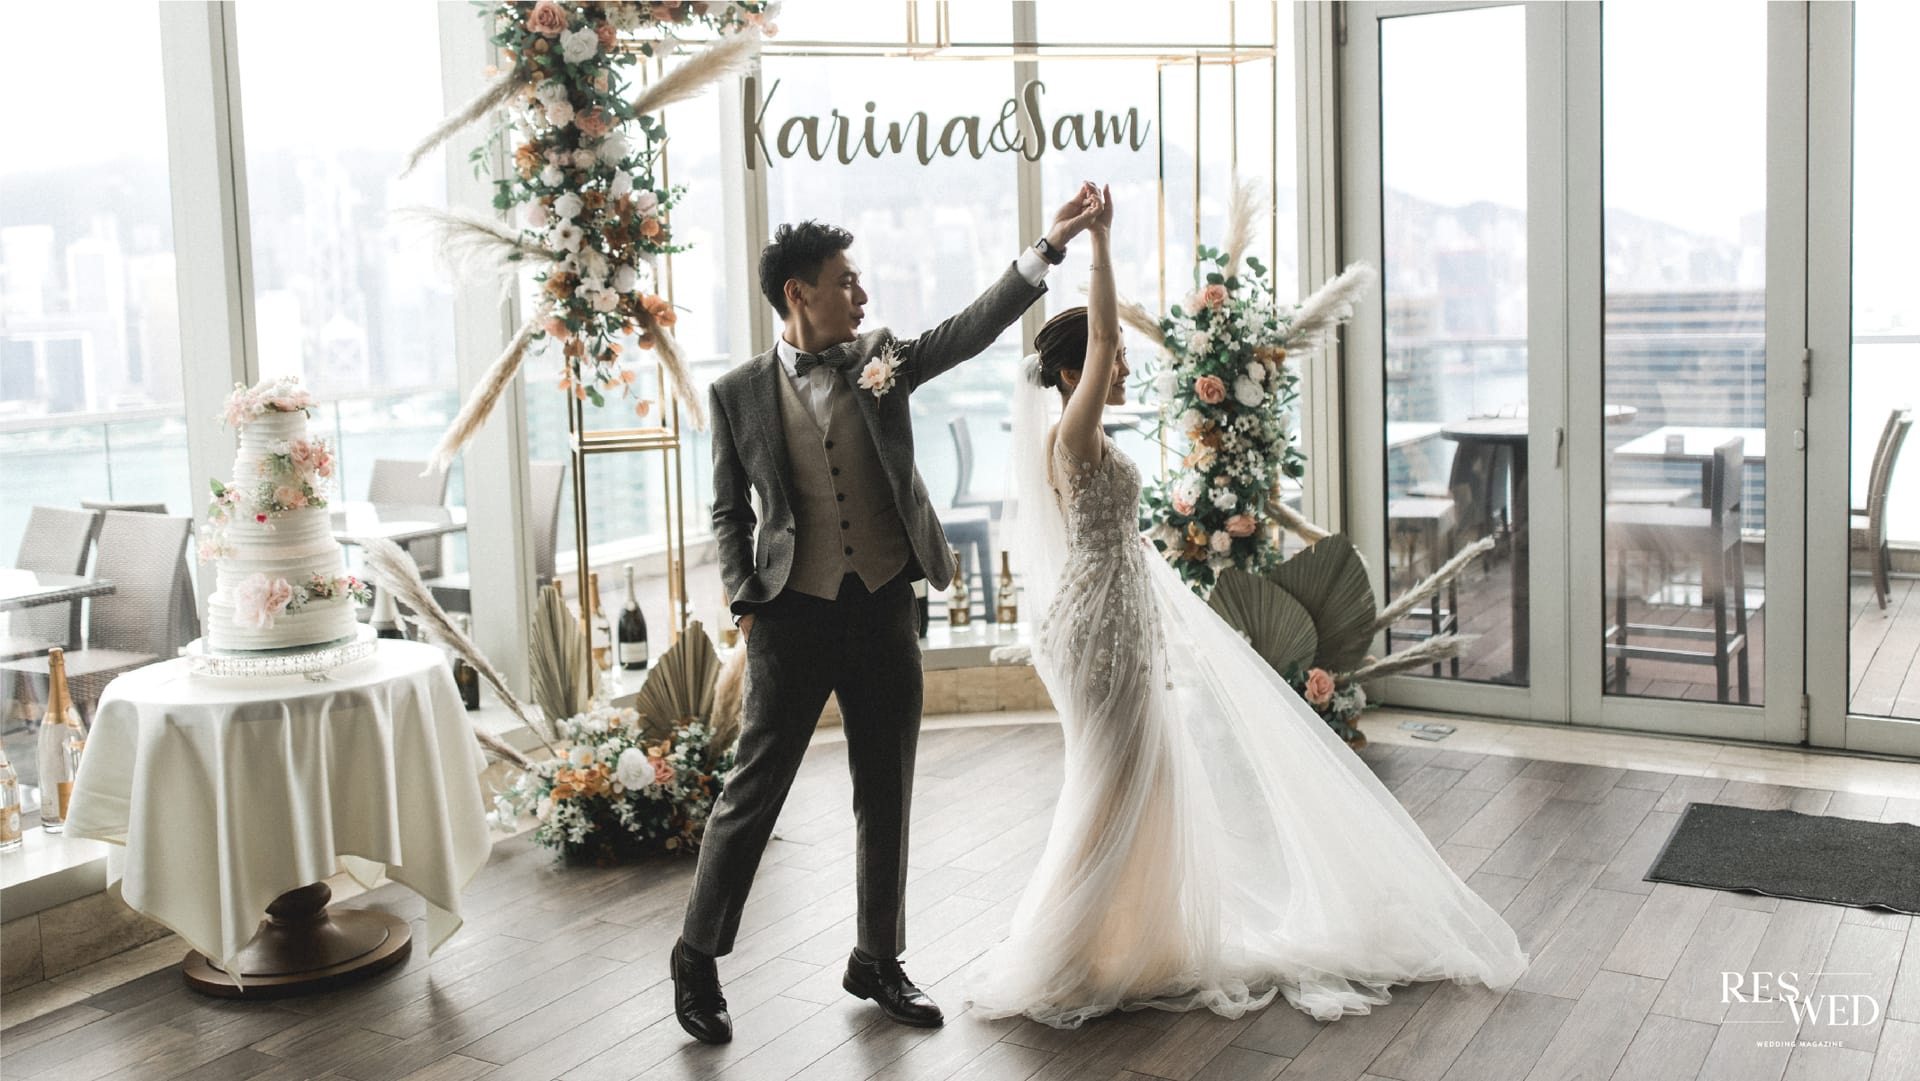 raytsangphotography：2021年第一場婚禮，也是我自己的婚禮